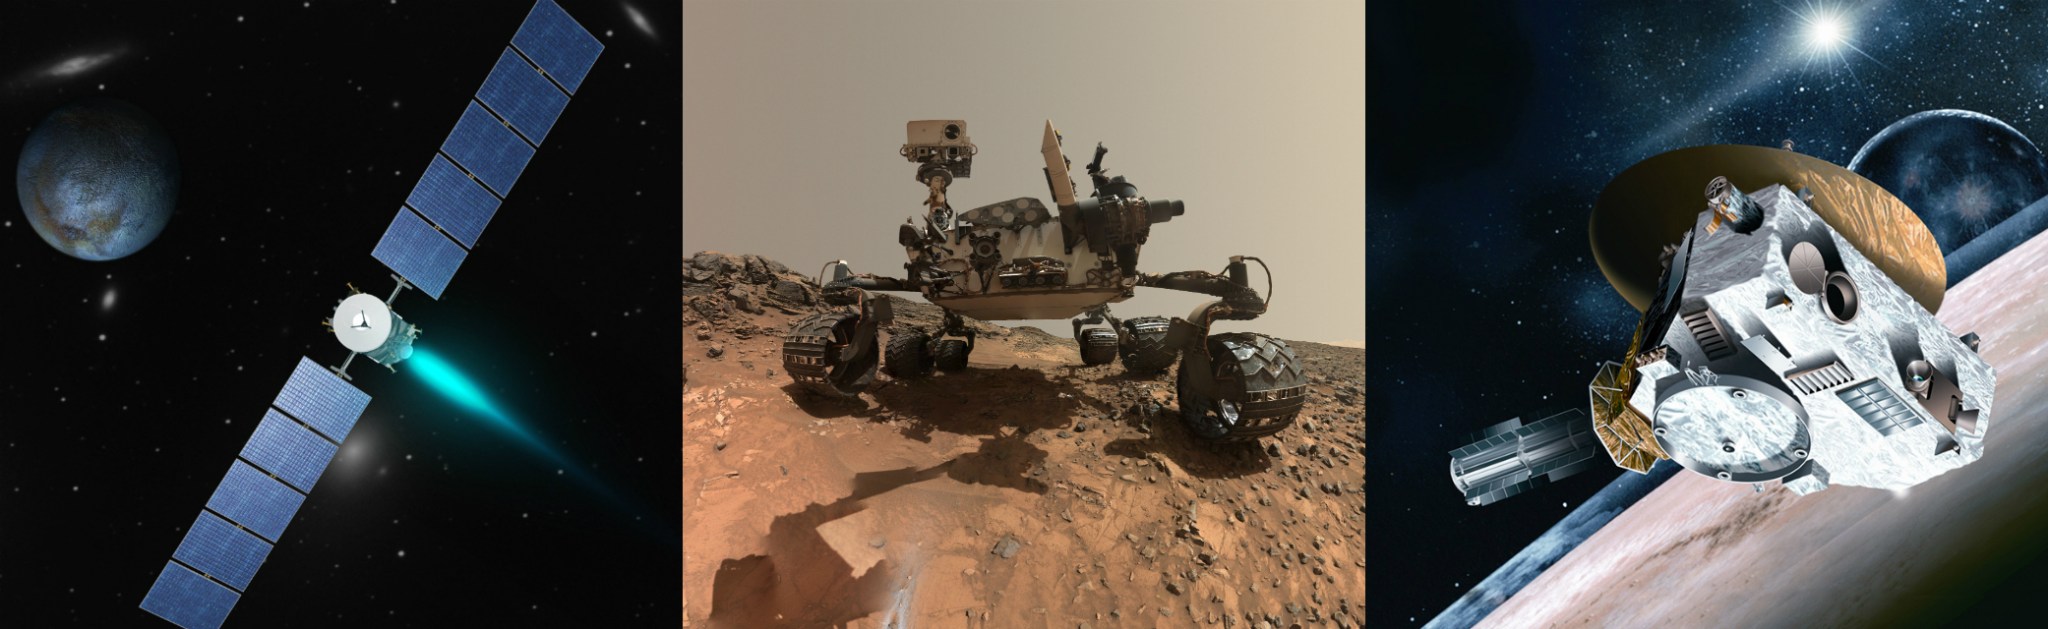 NASA Dawn spacecraft, Curiosity Mars rover and New Horizons spacecraft.